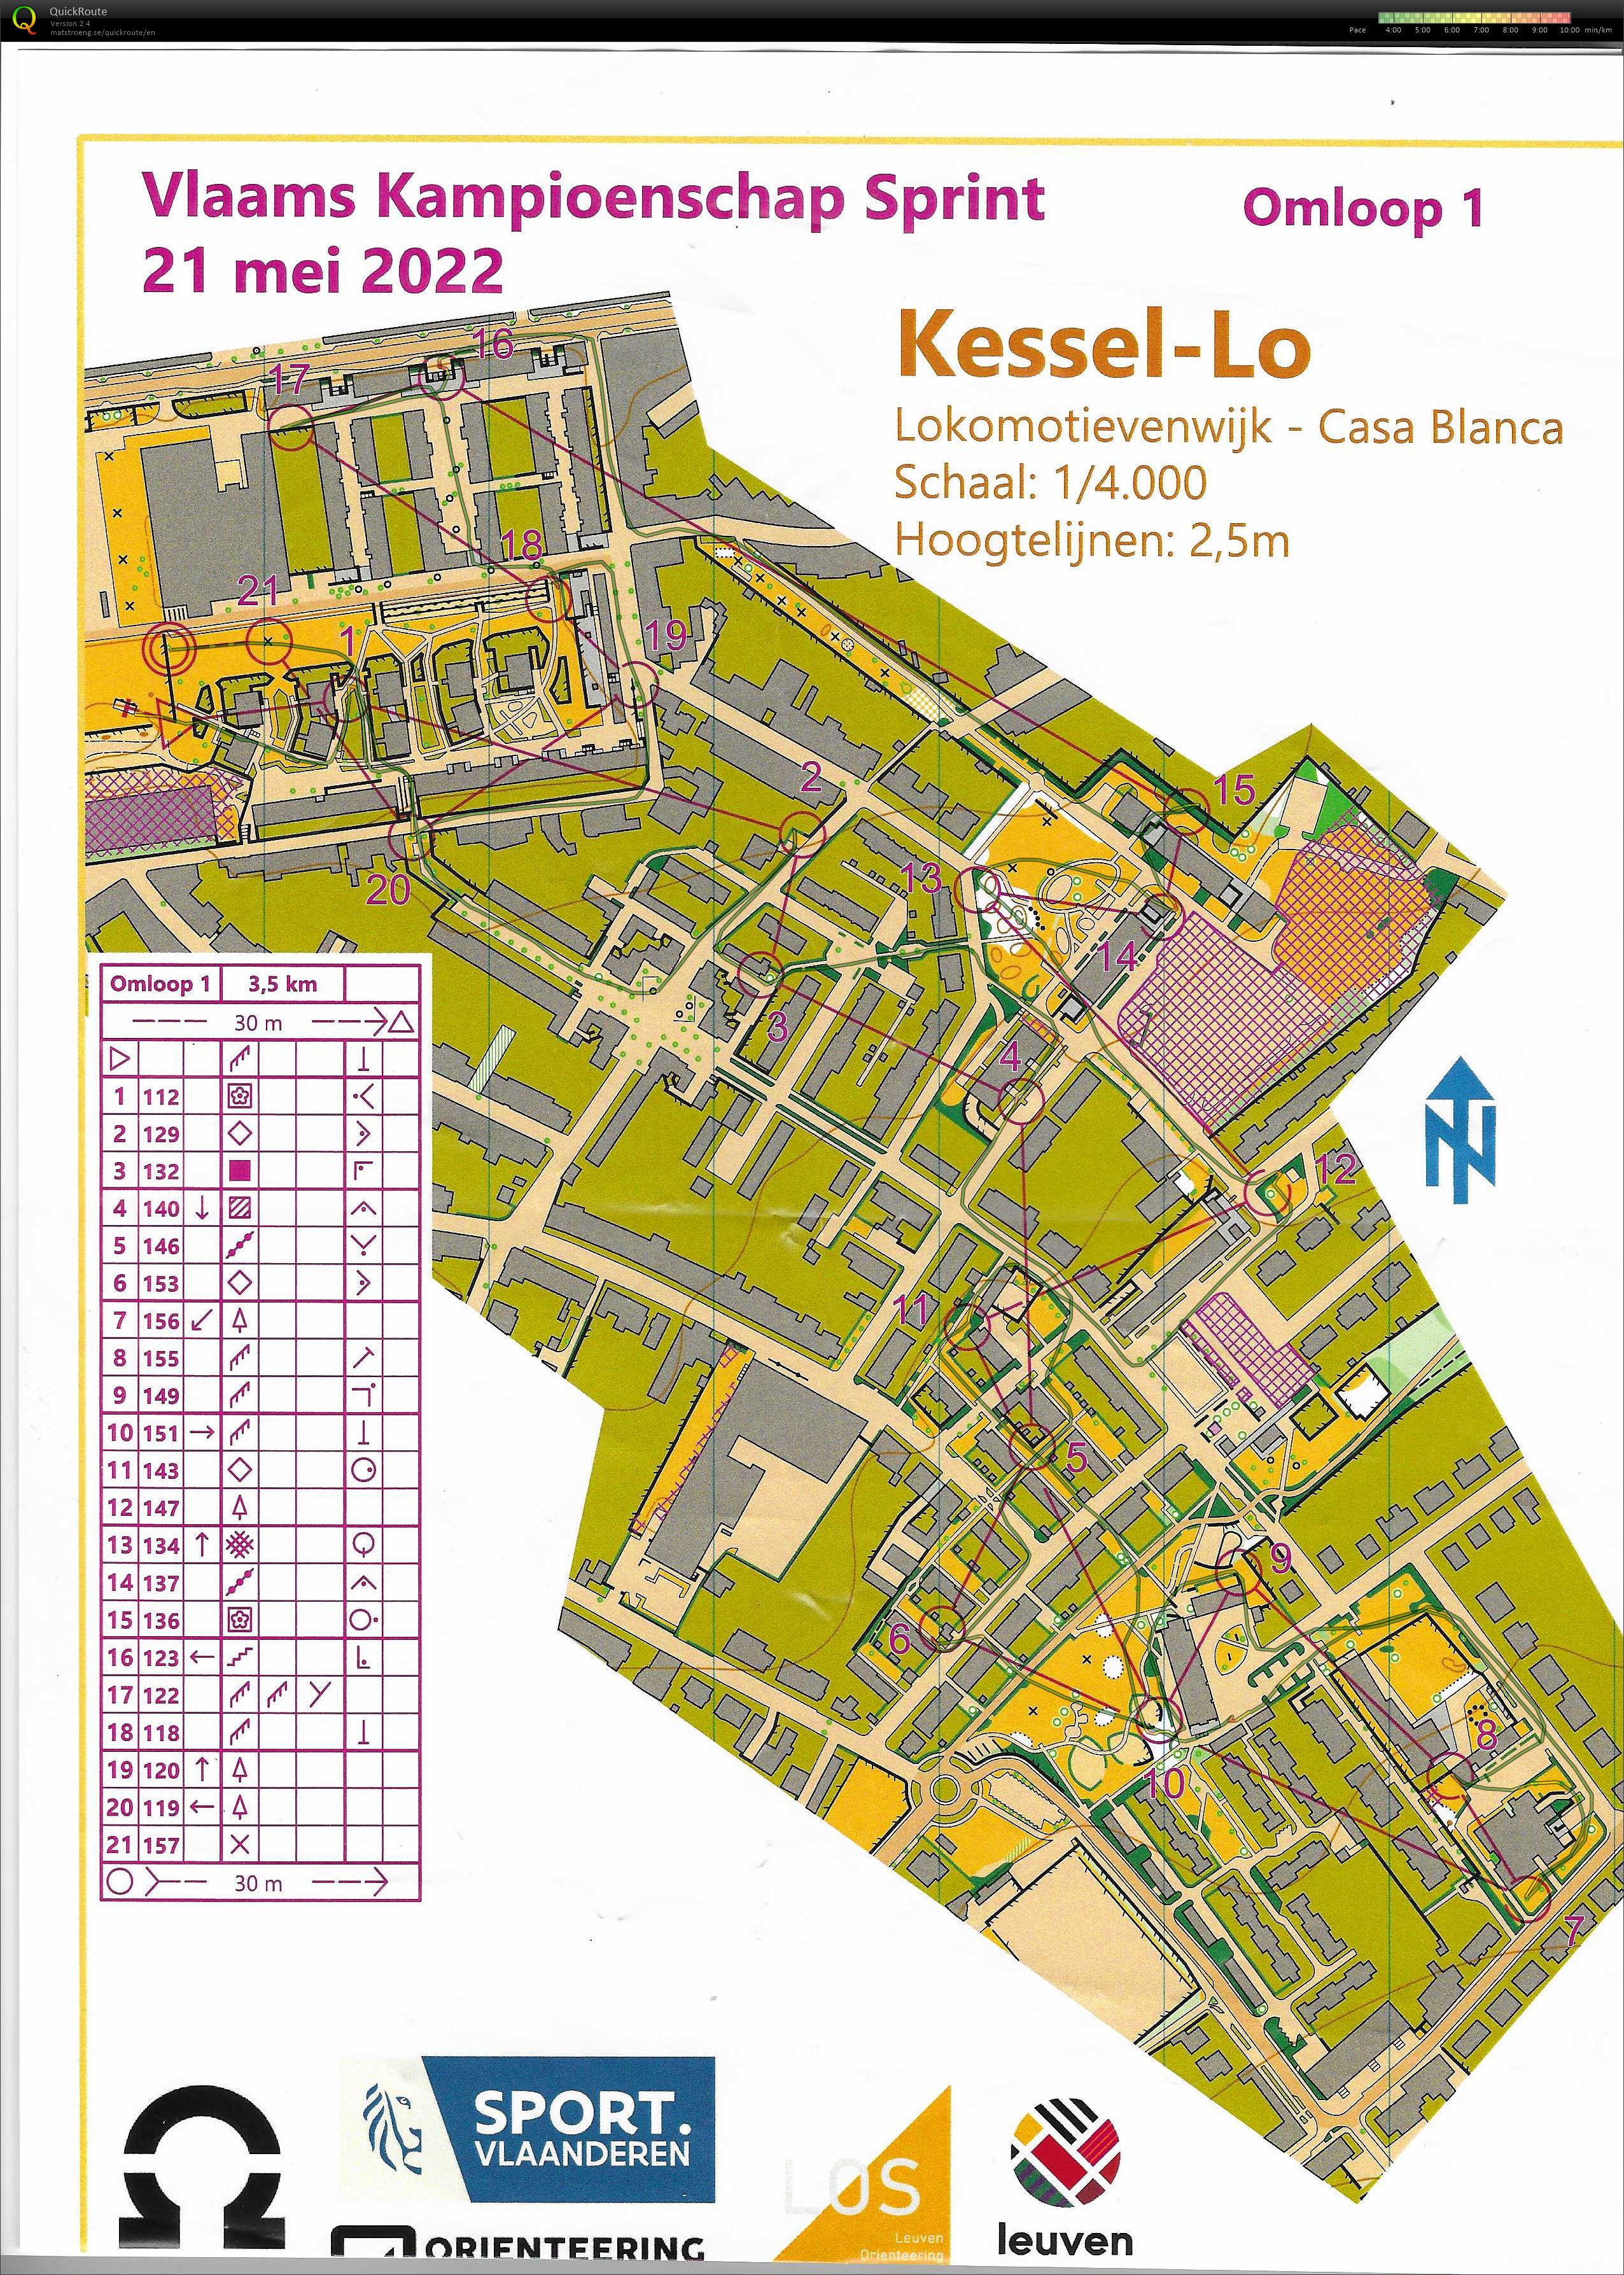 VK Sprint Kessel-Lo (21/05/2022)